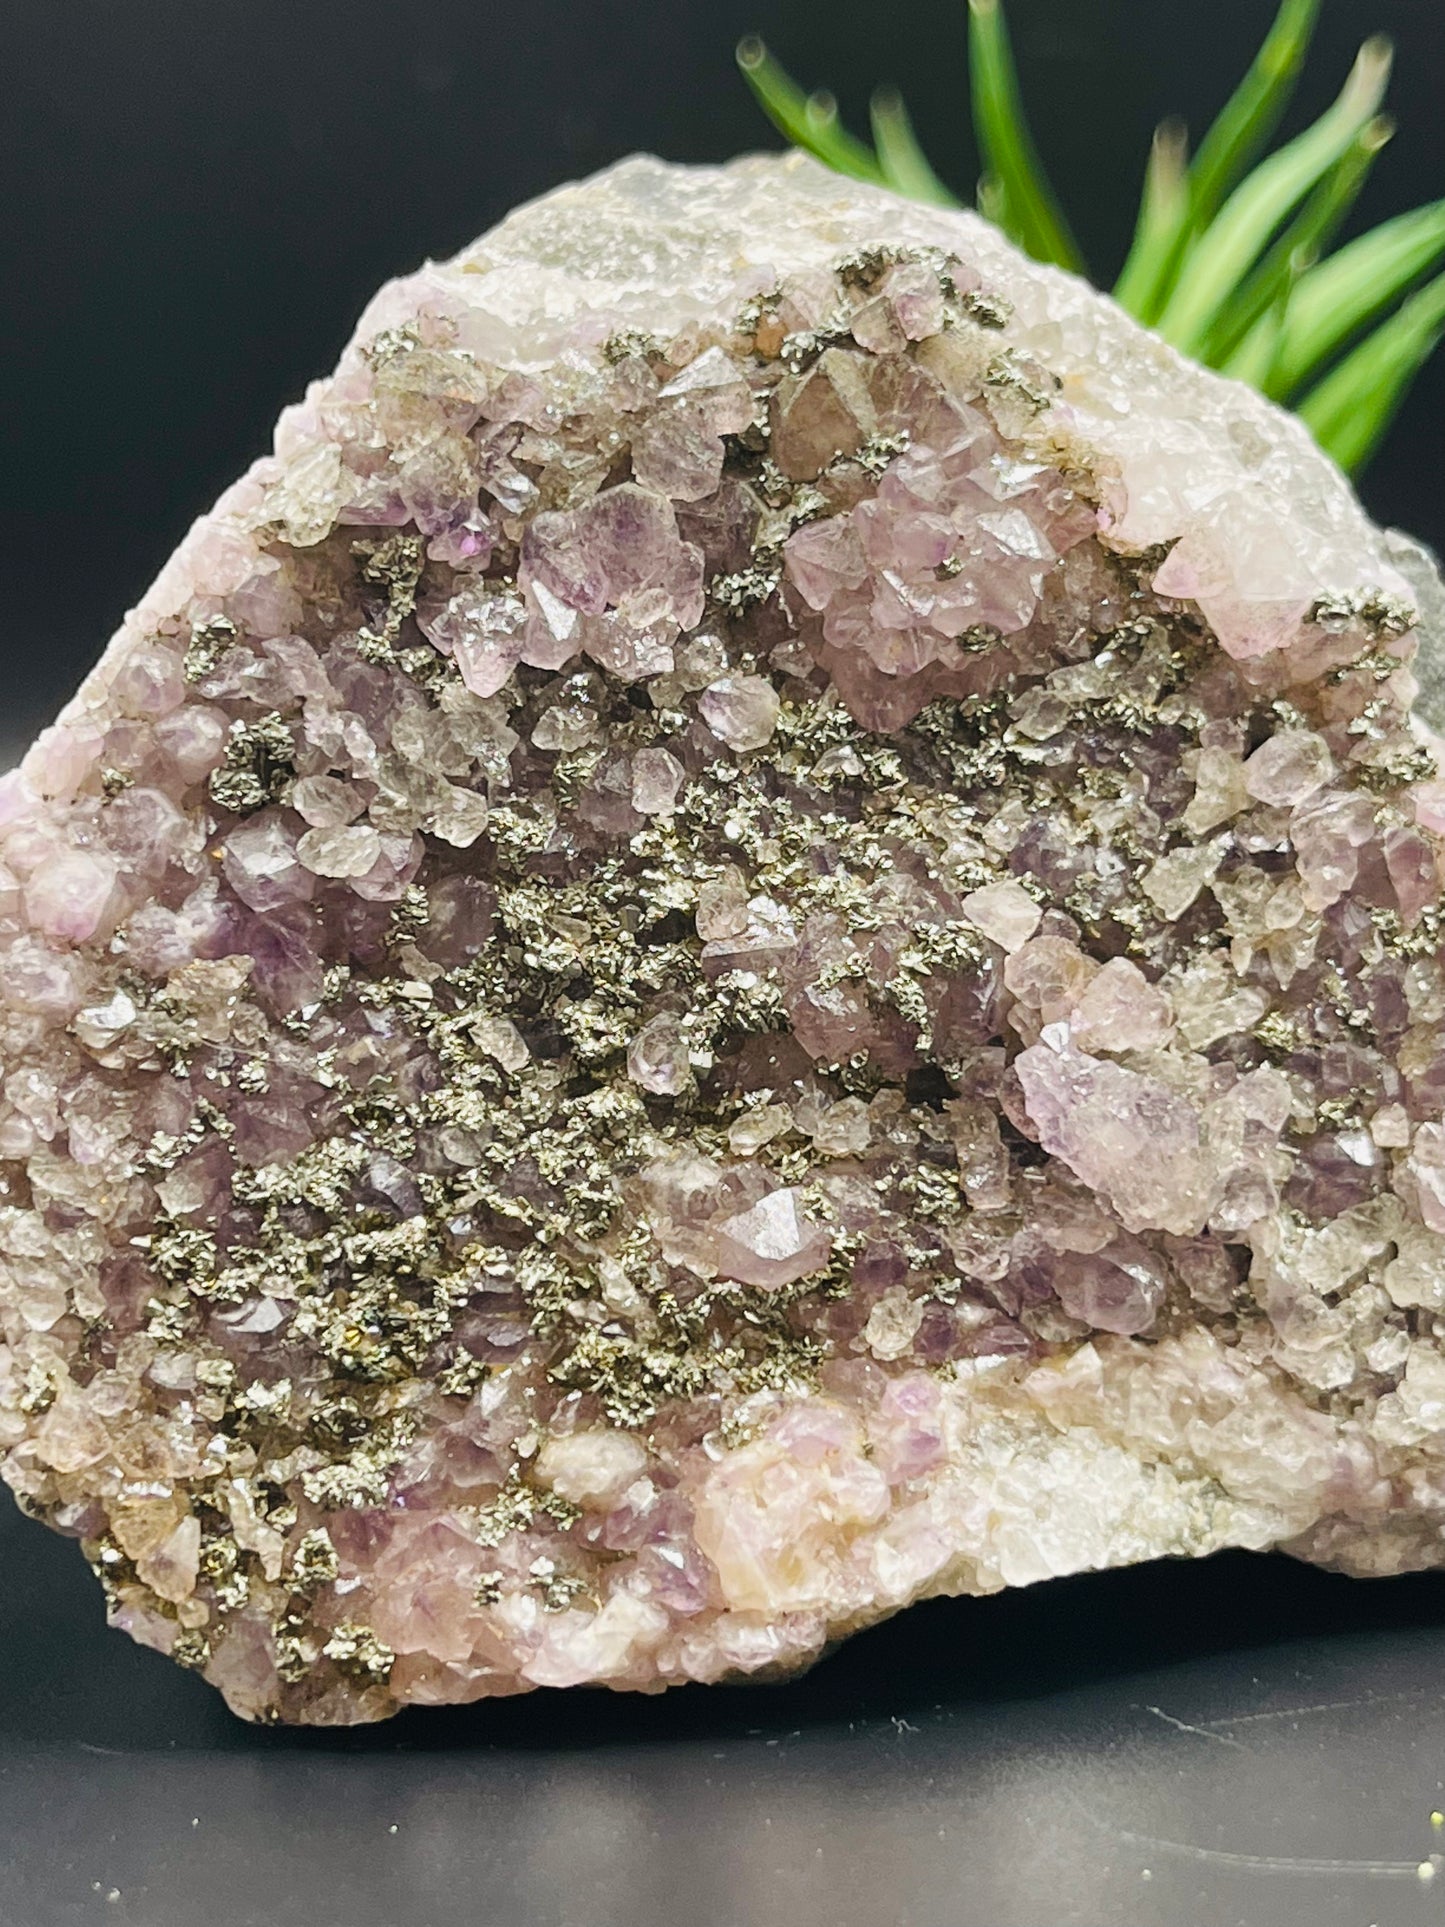 Thunder Bay Amethyst (Auralite 23) with pyrite